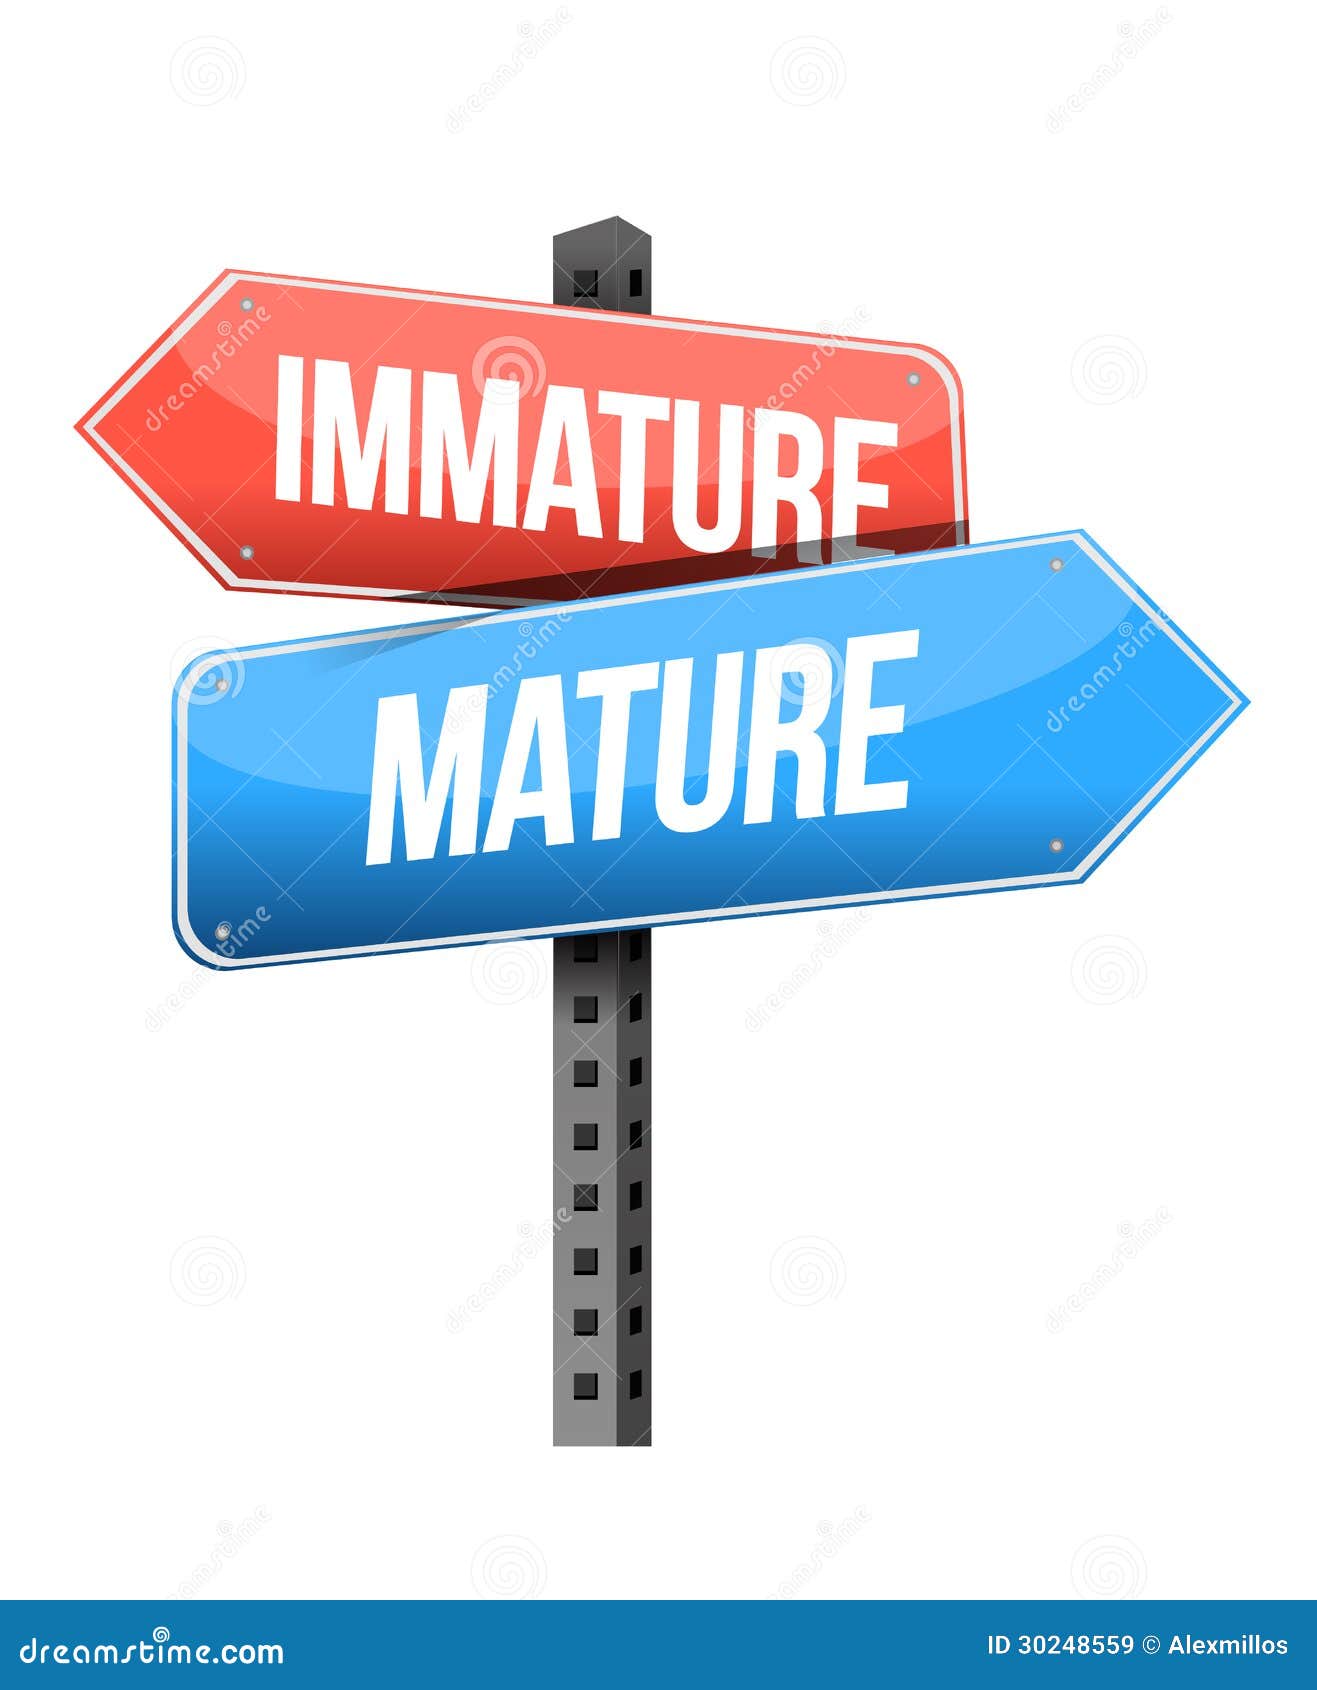 Immature mature vs Emotional Intelligence: